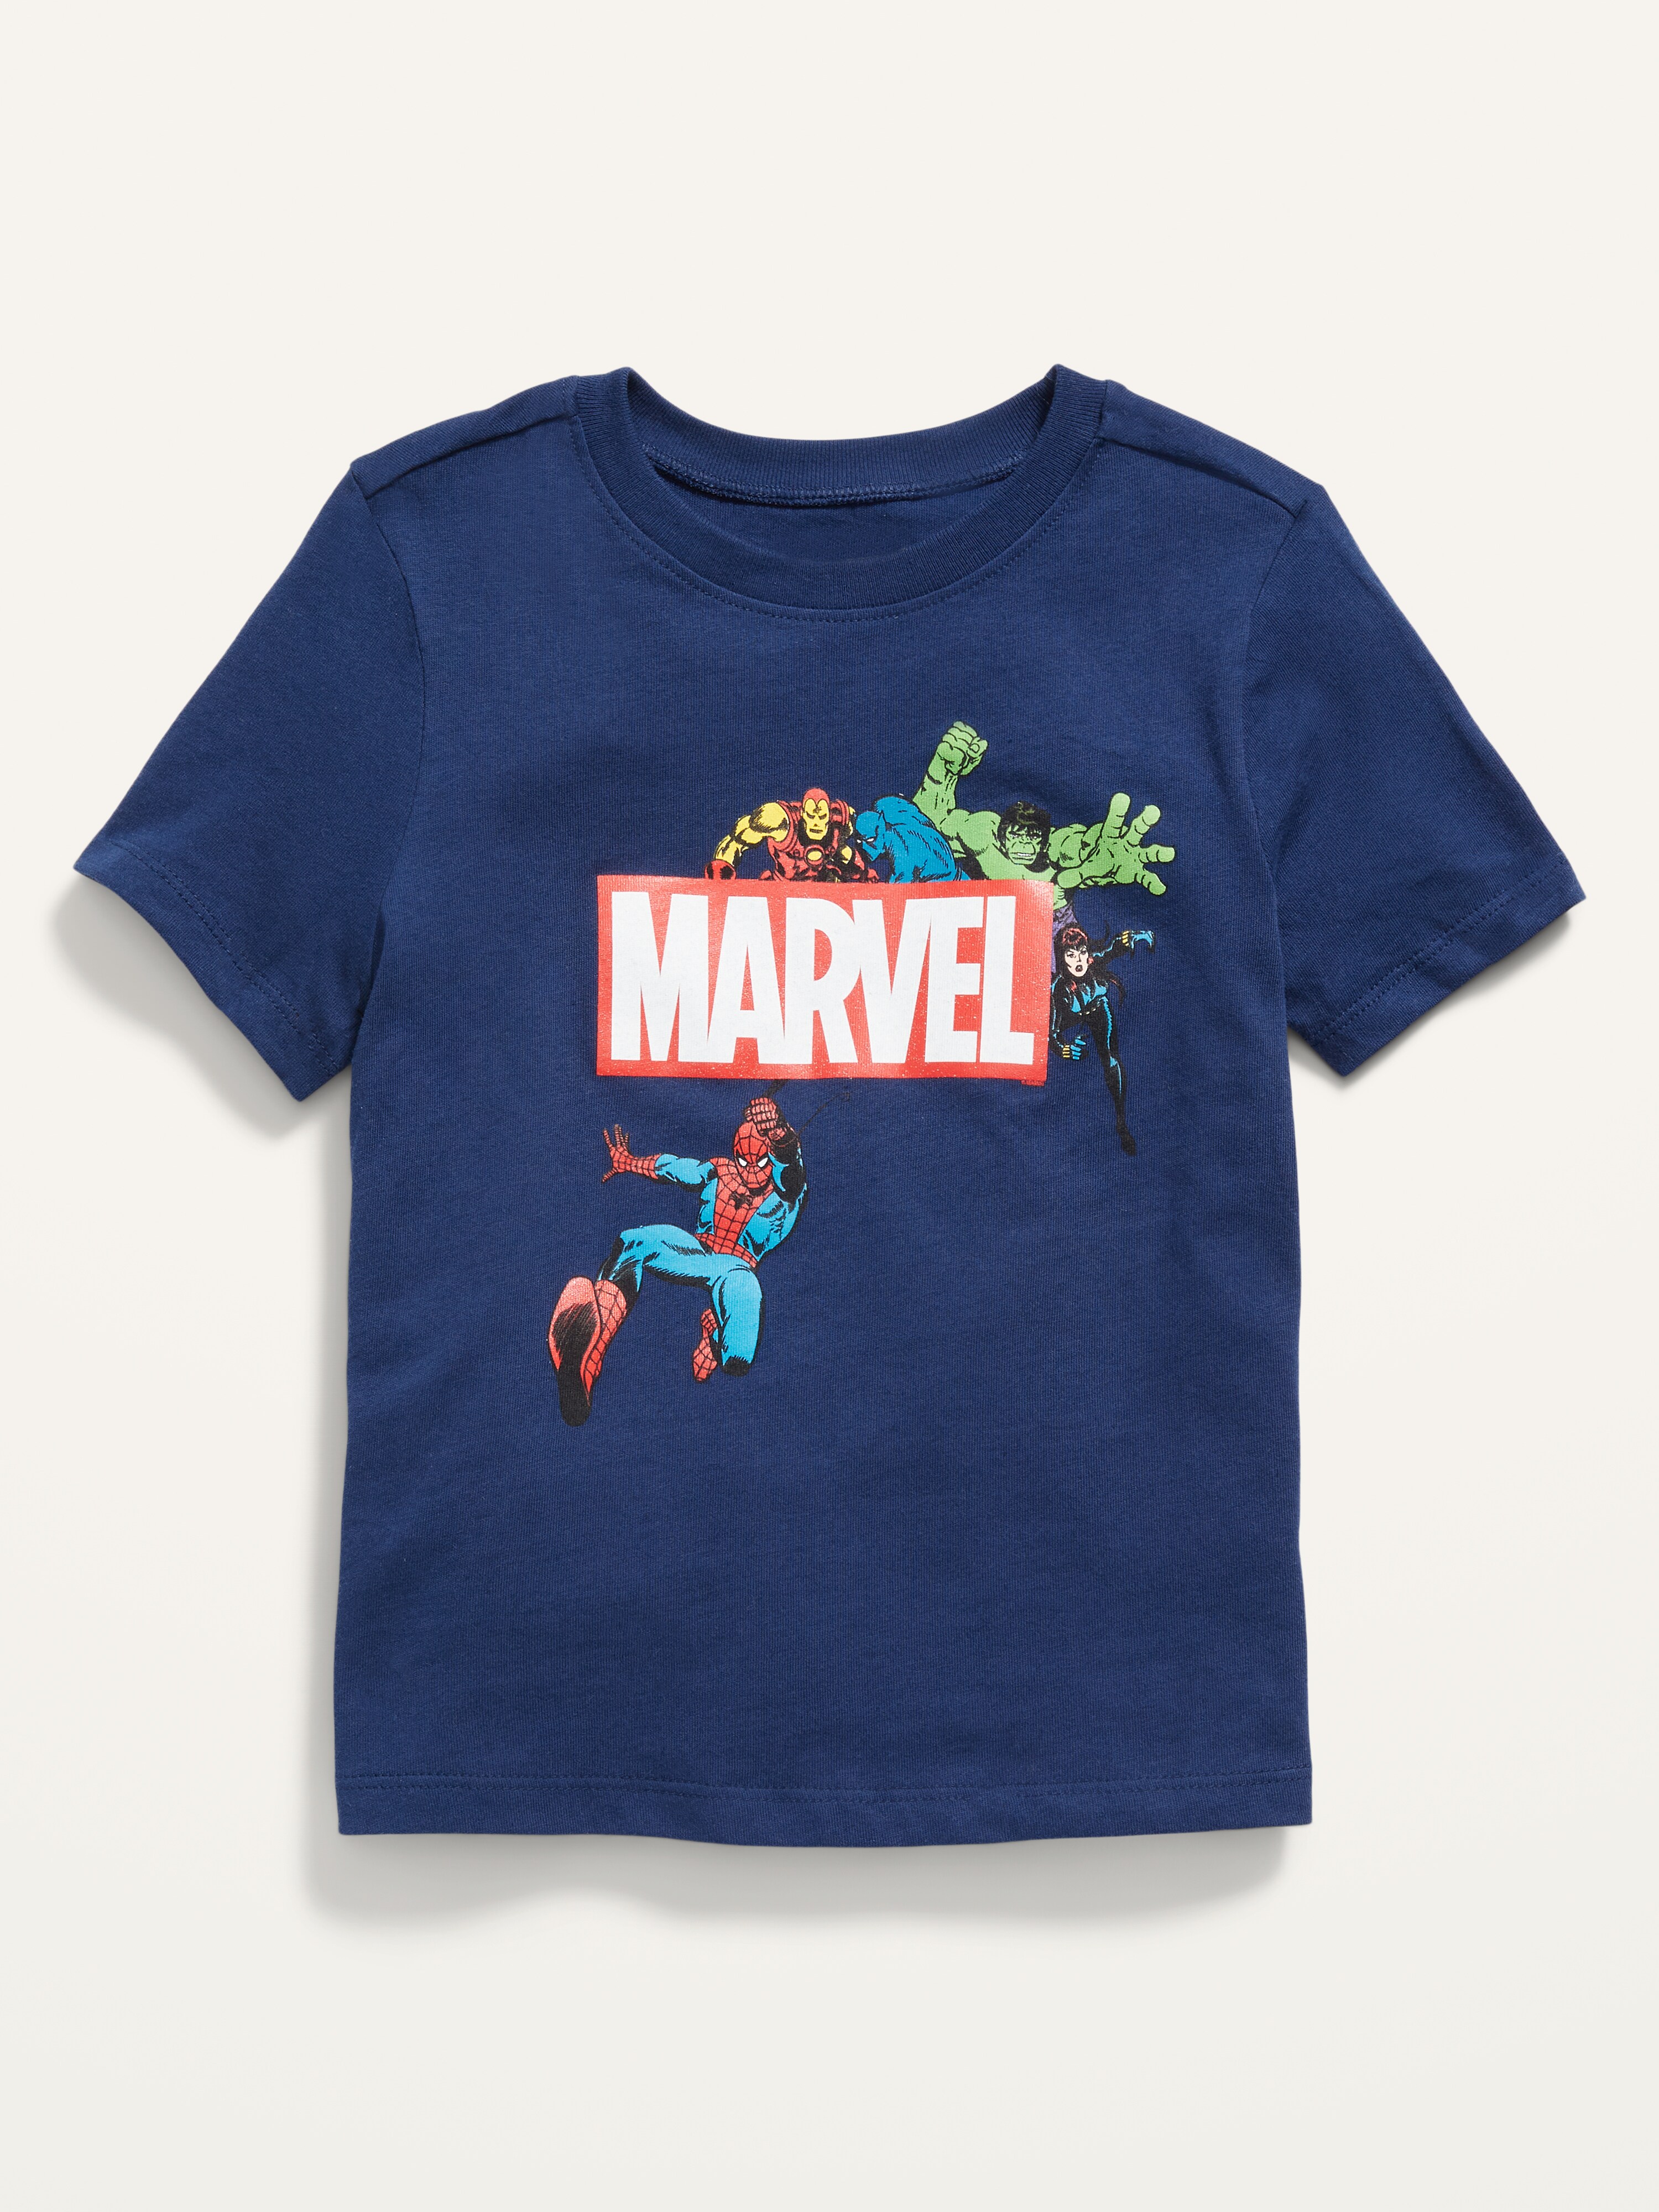 Marvel Comics Avengers Toddler Blue T-Shirt Size 4T NWT 